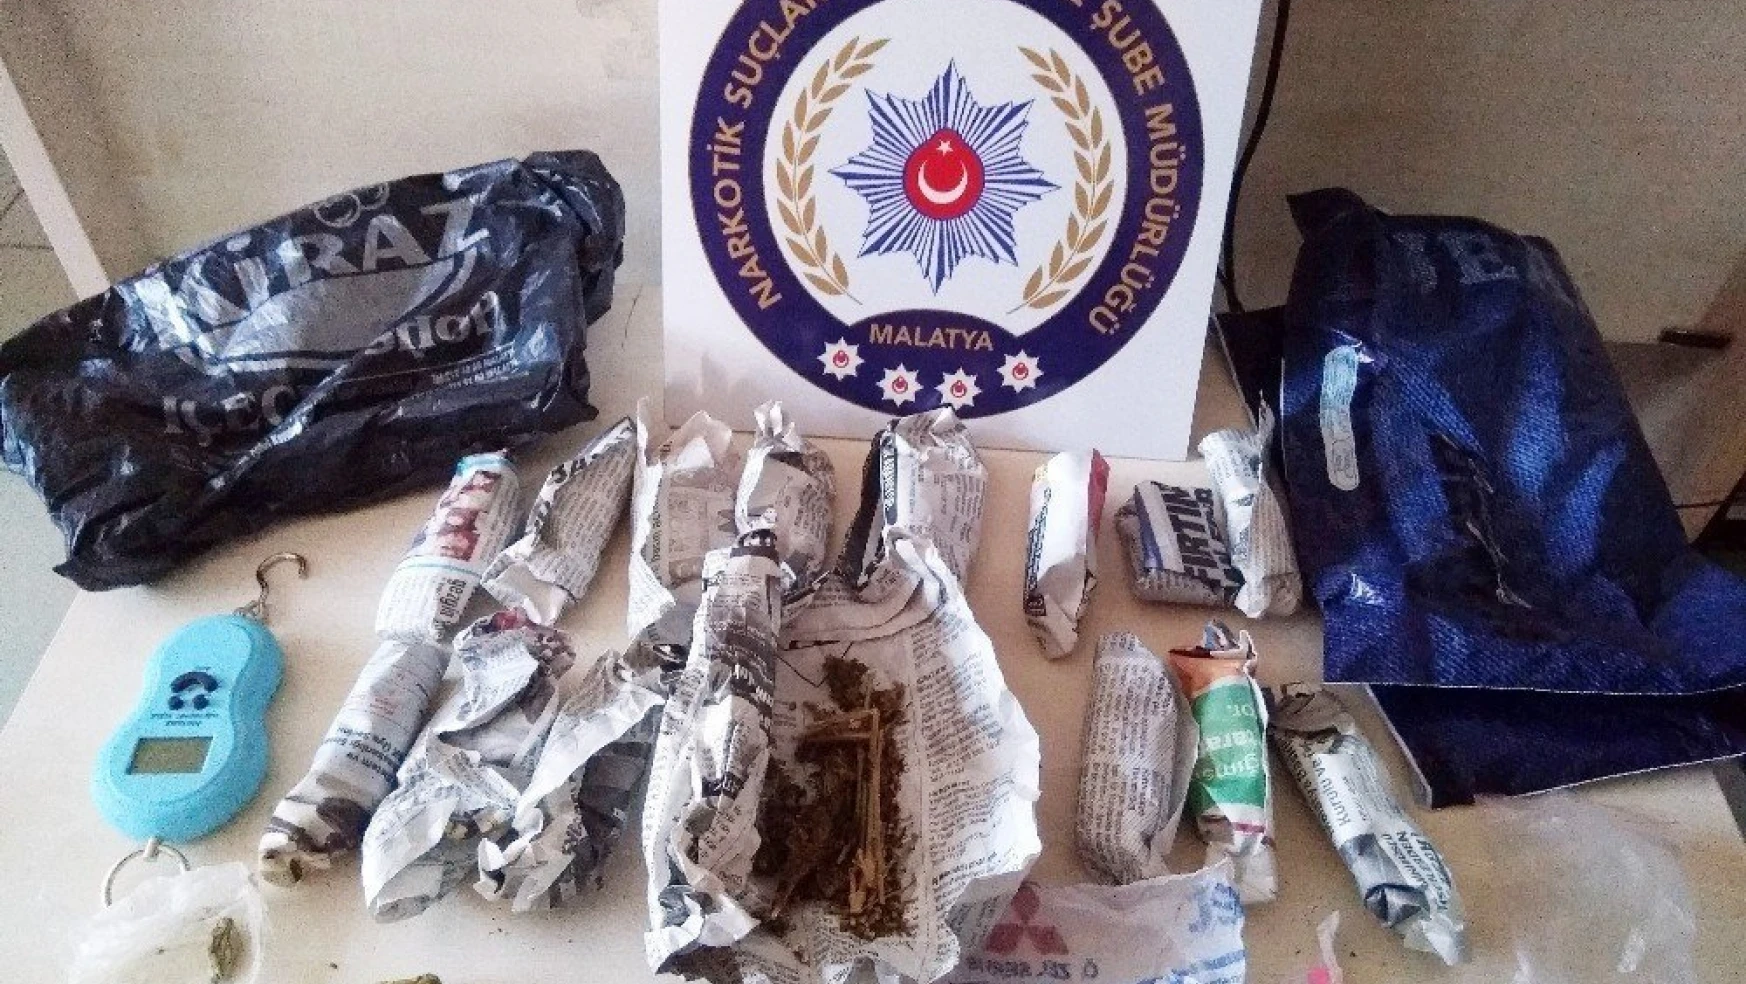 Malatya'daki uyuşturucu operasyonunda 1 tutuklama